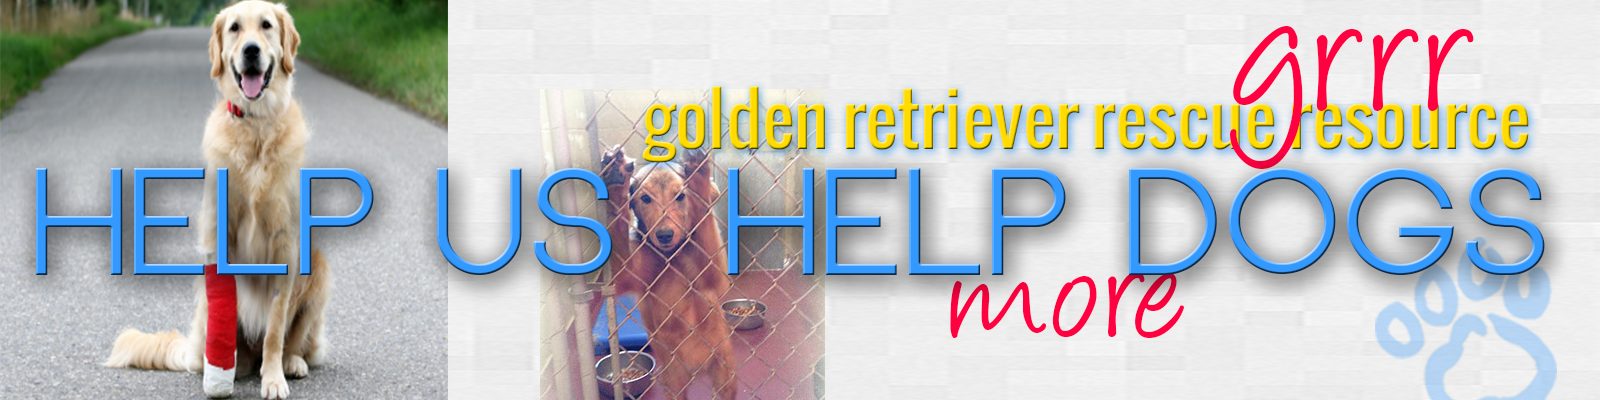 Help Us Help More Golden Retriever Dogs, Donate header